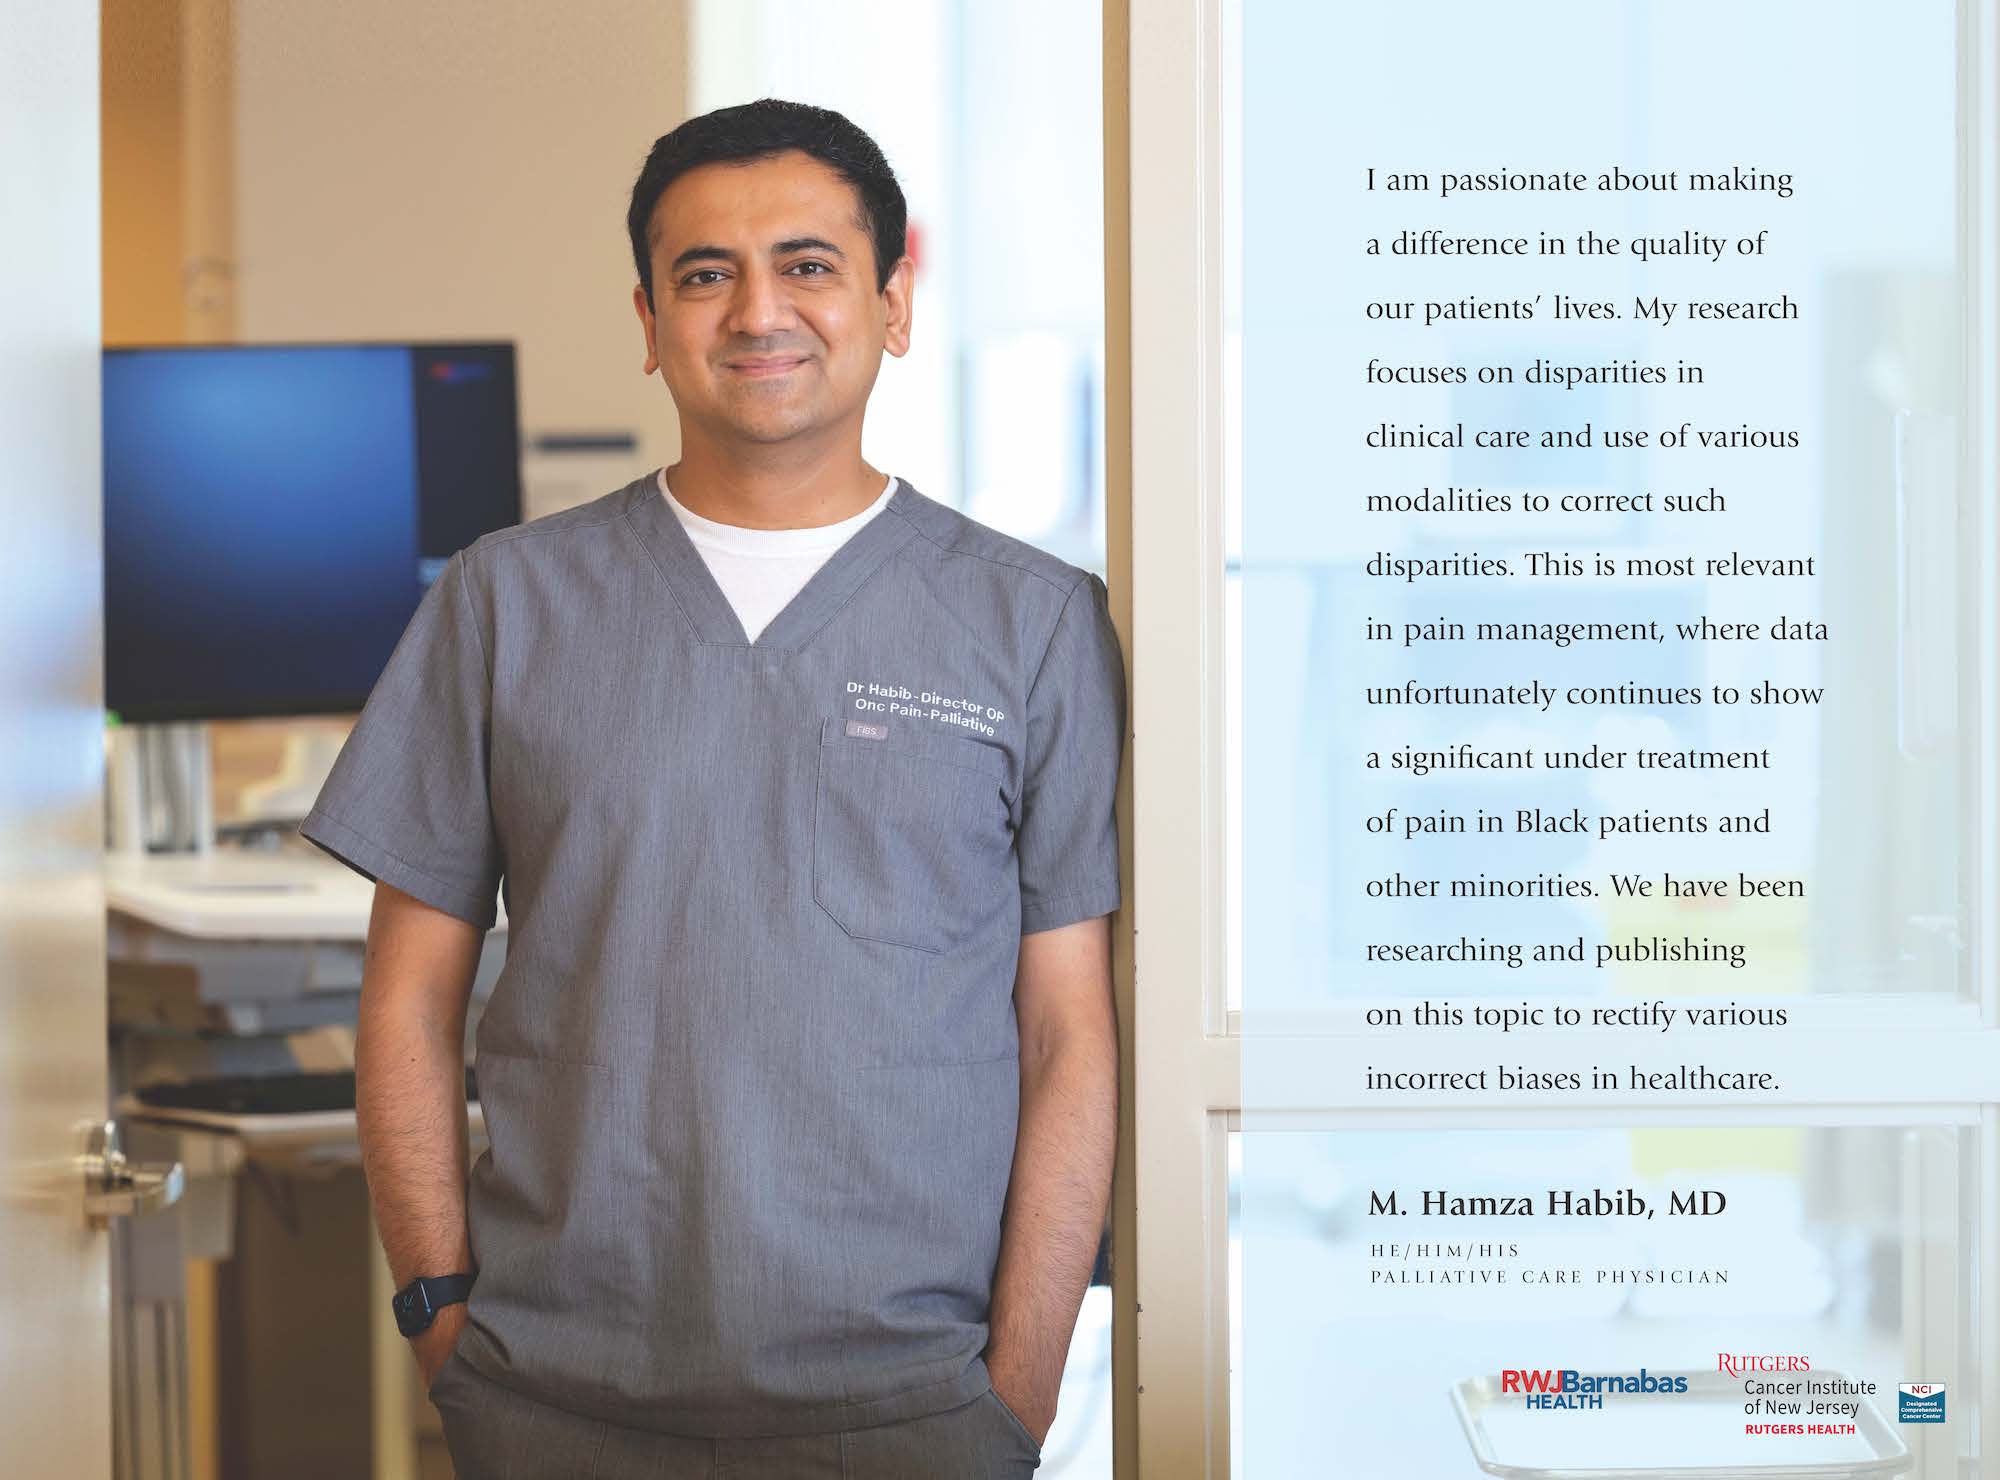 Show Up image of Dr. Habib